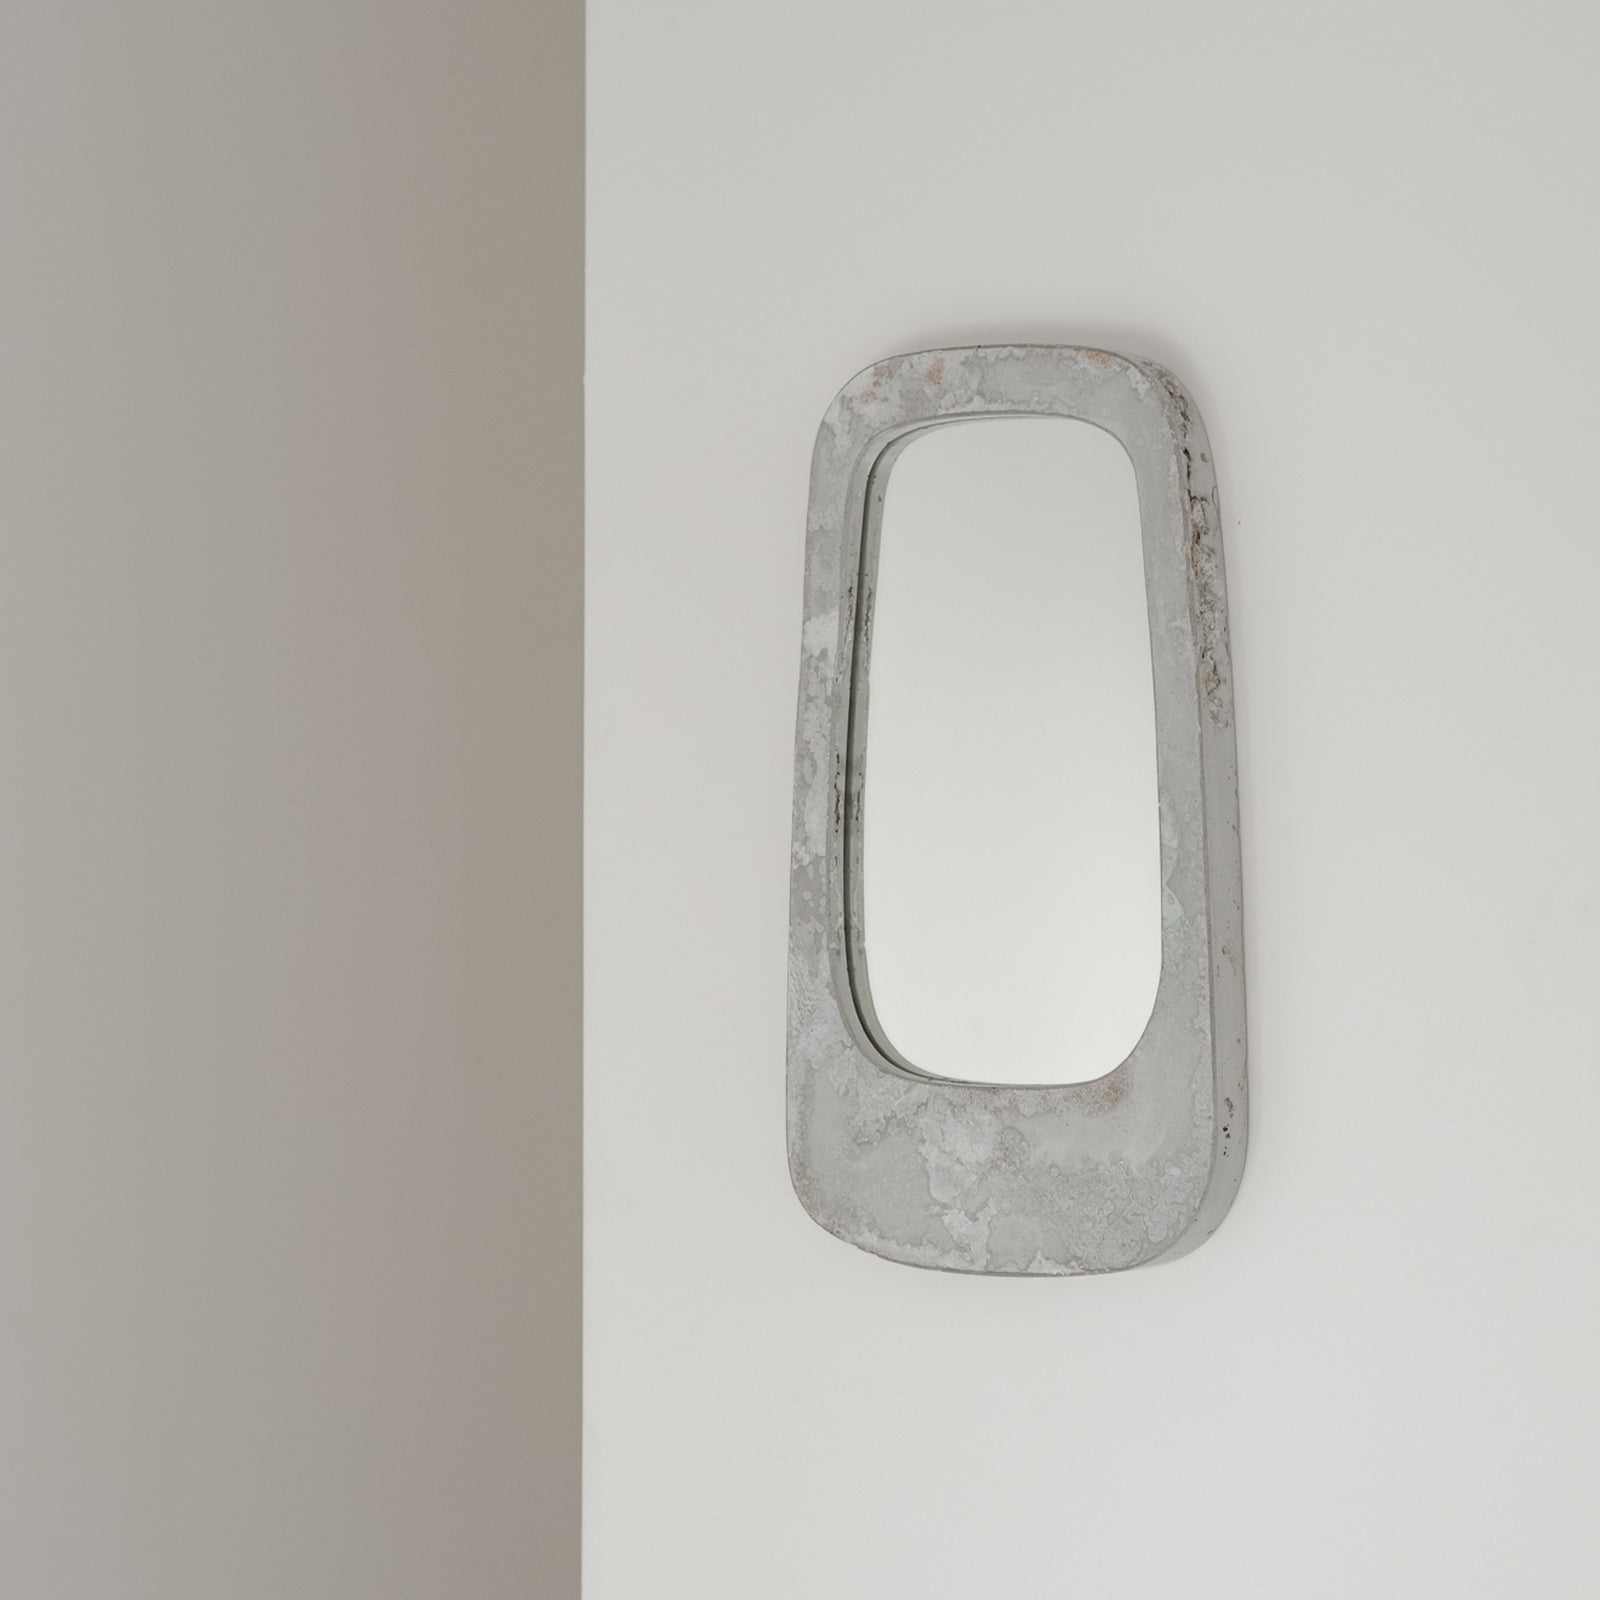 Concrete Curved Mirror